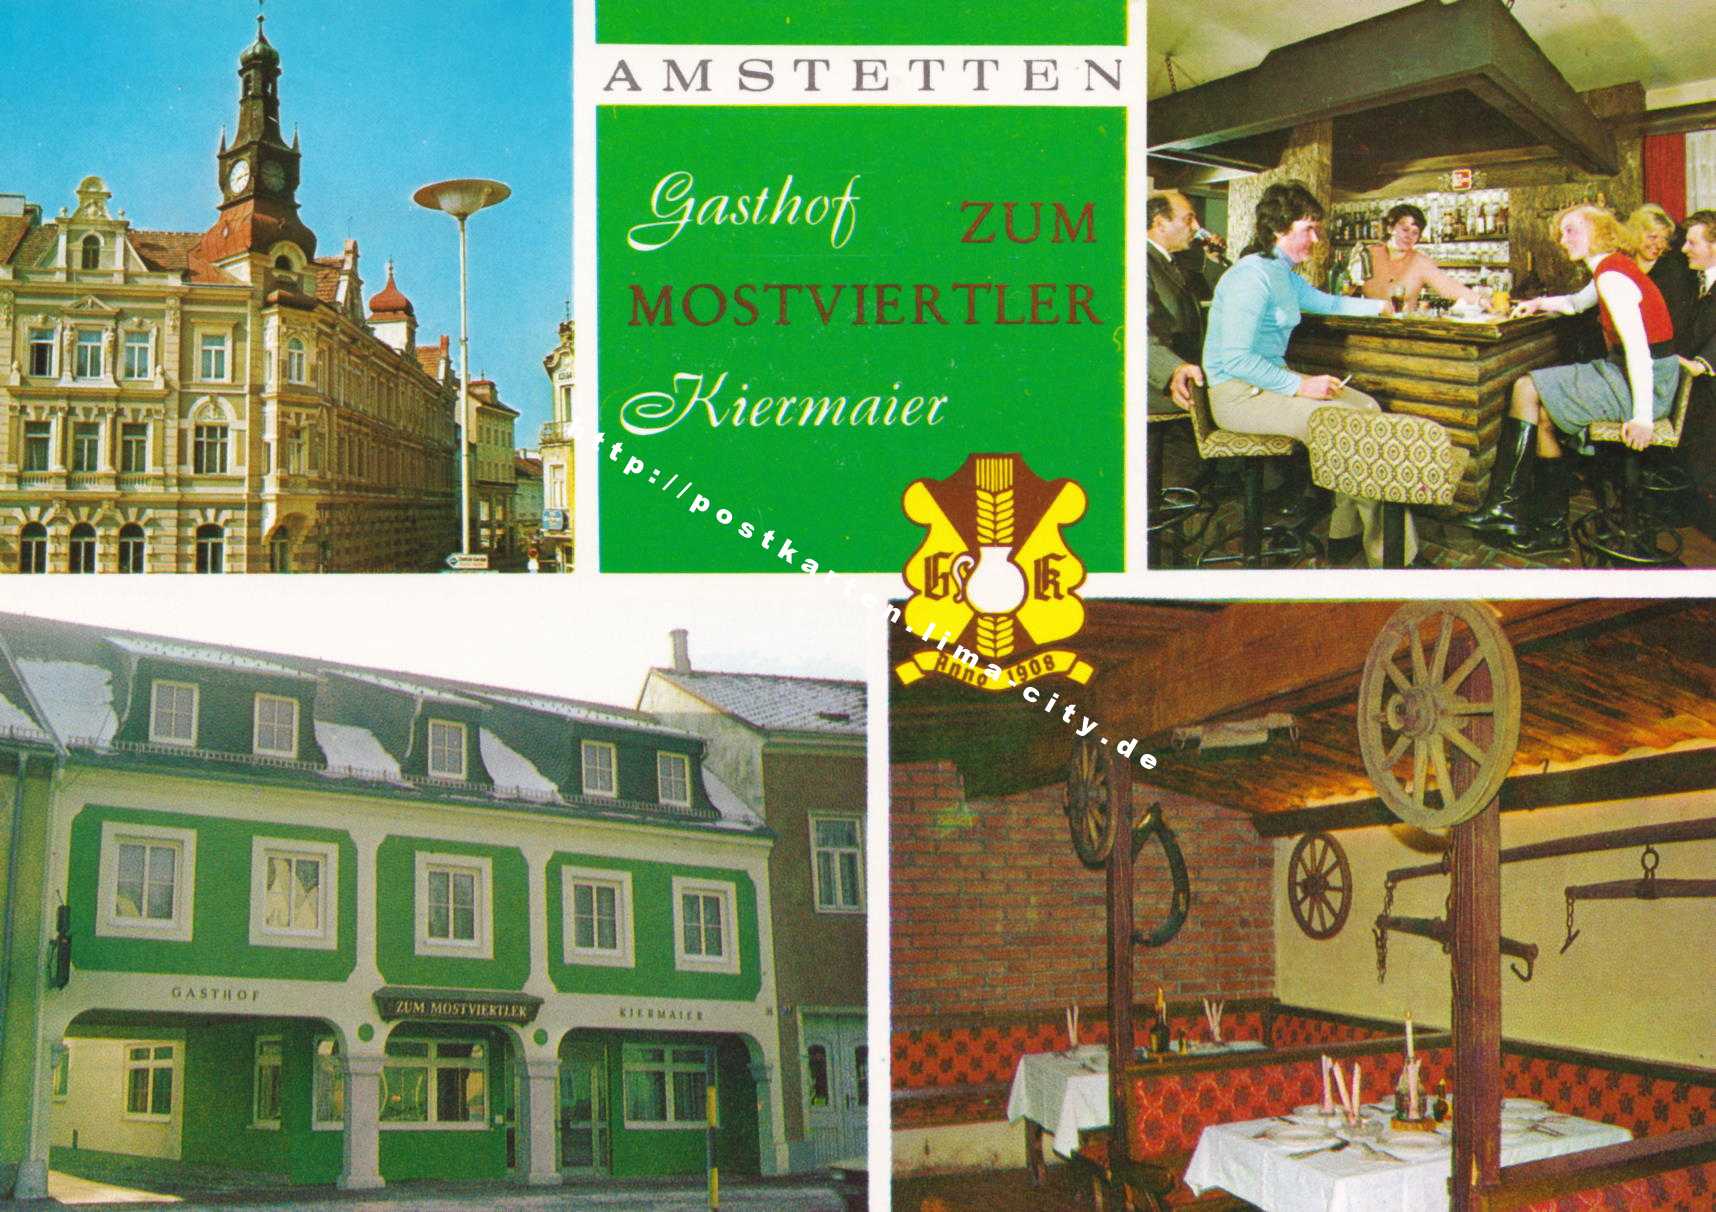 Amstetten Gasthaus Kiermaier 